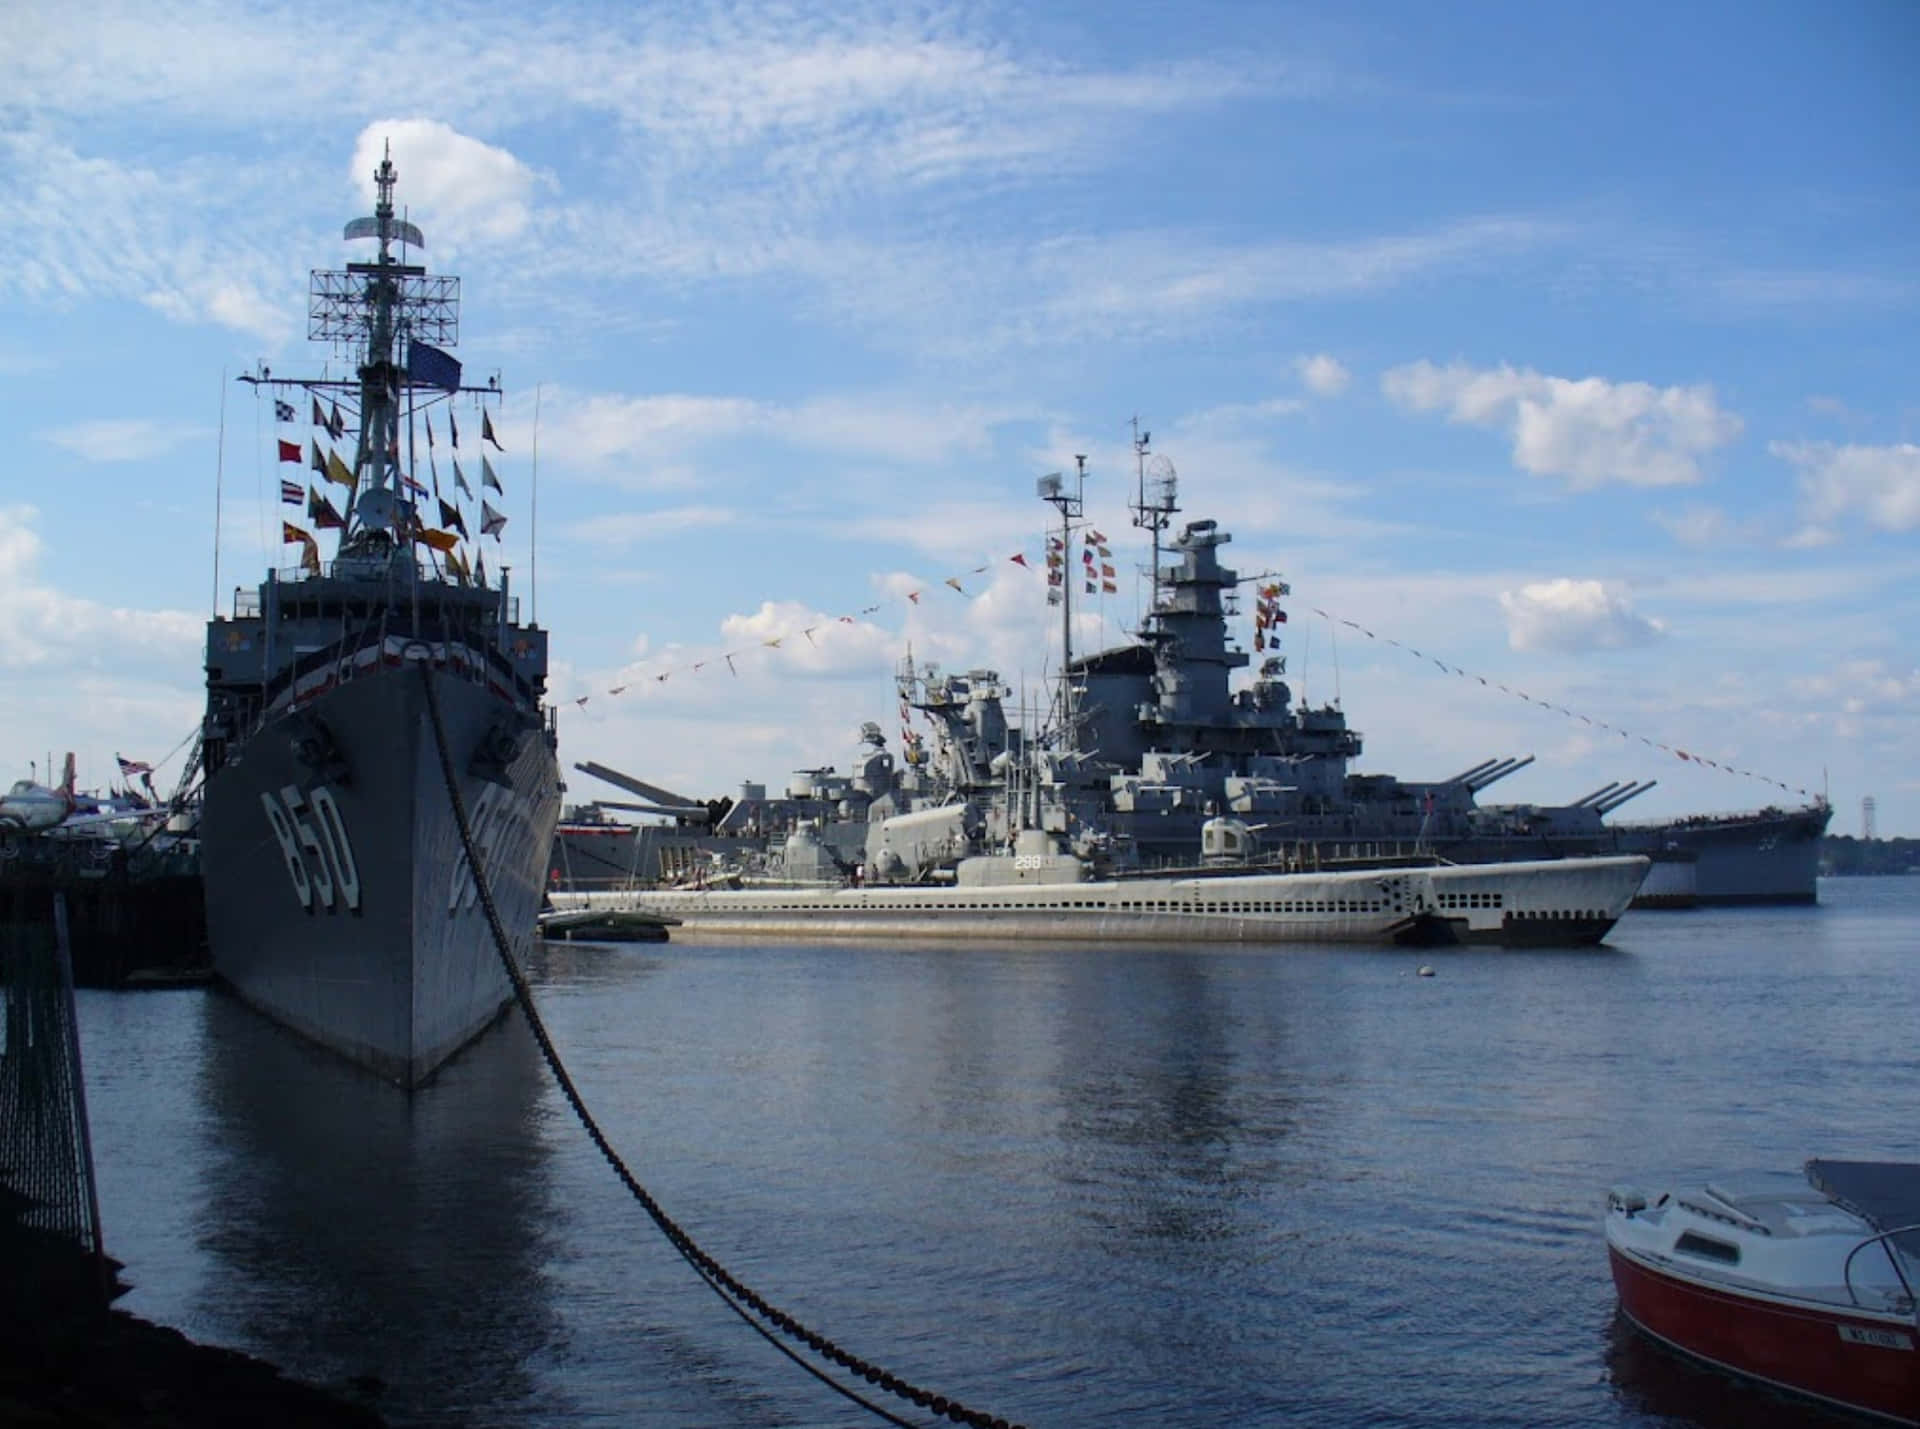 "War of the Atlantic: A fleet of battleships on the horizon"